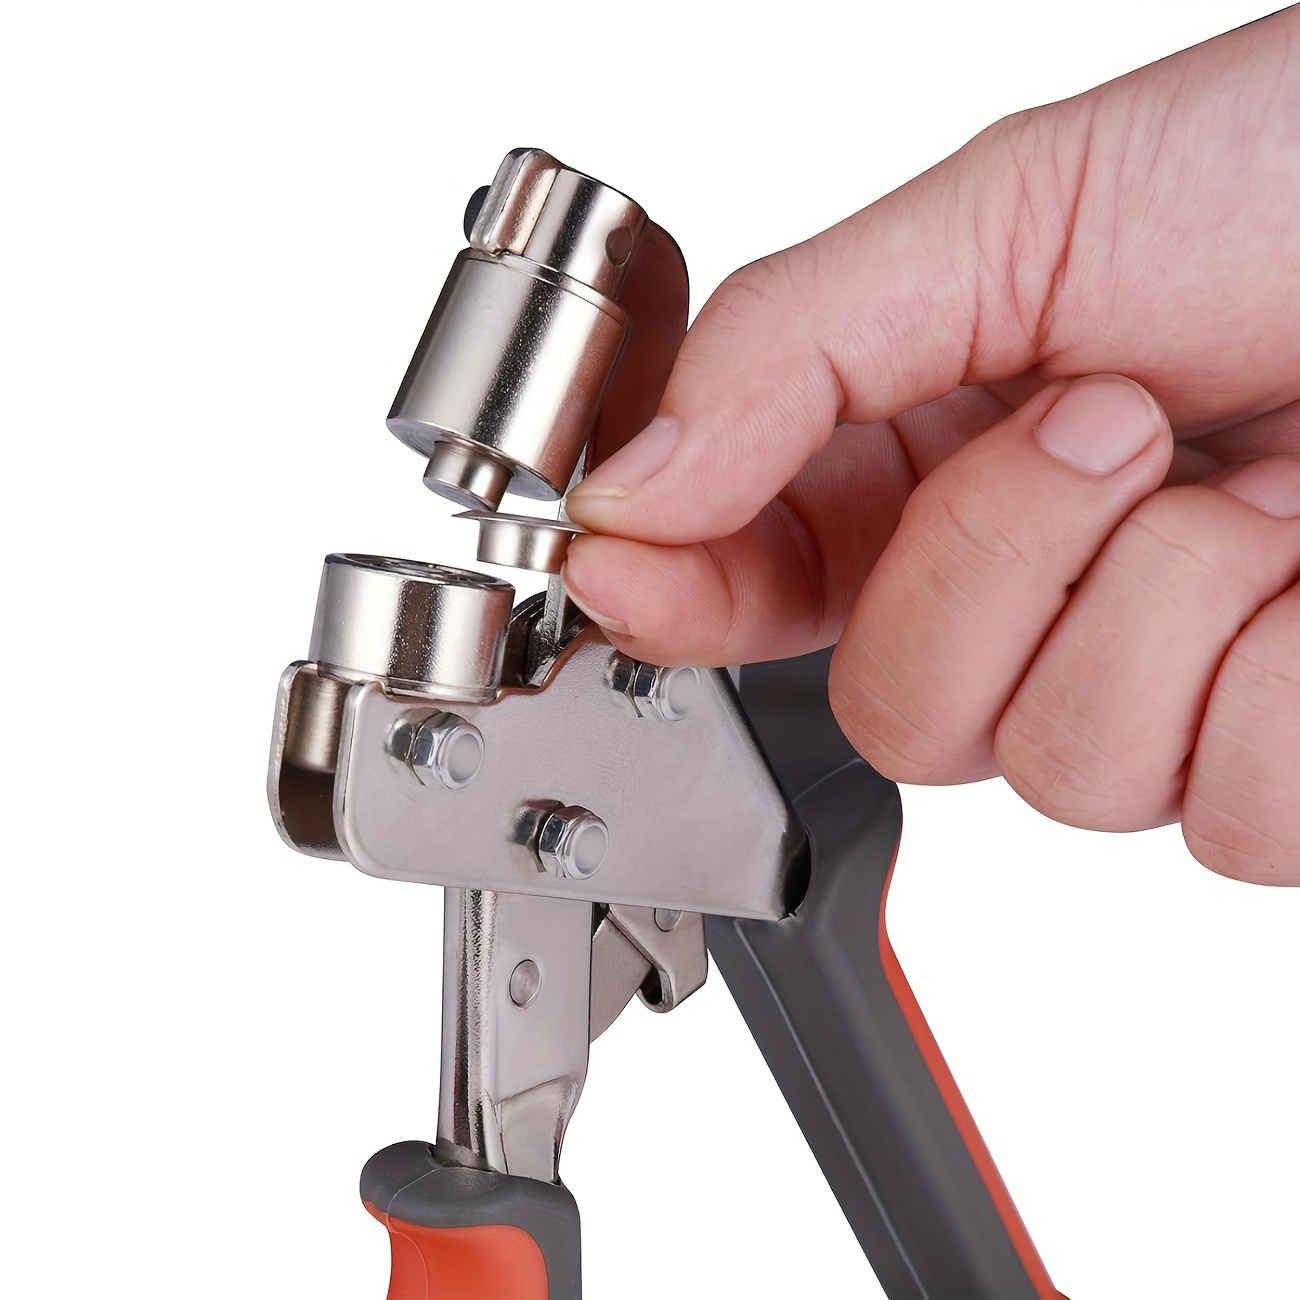 Preciva Grommet Tool Kit, Portable Handheld Hole Punch Pliers Grommet Kit, Hand Press Machine Manual Puncher with 500pcs Silver Grommet